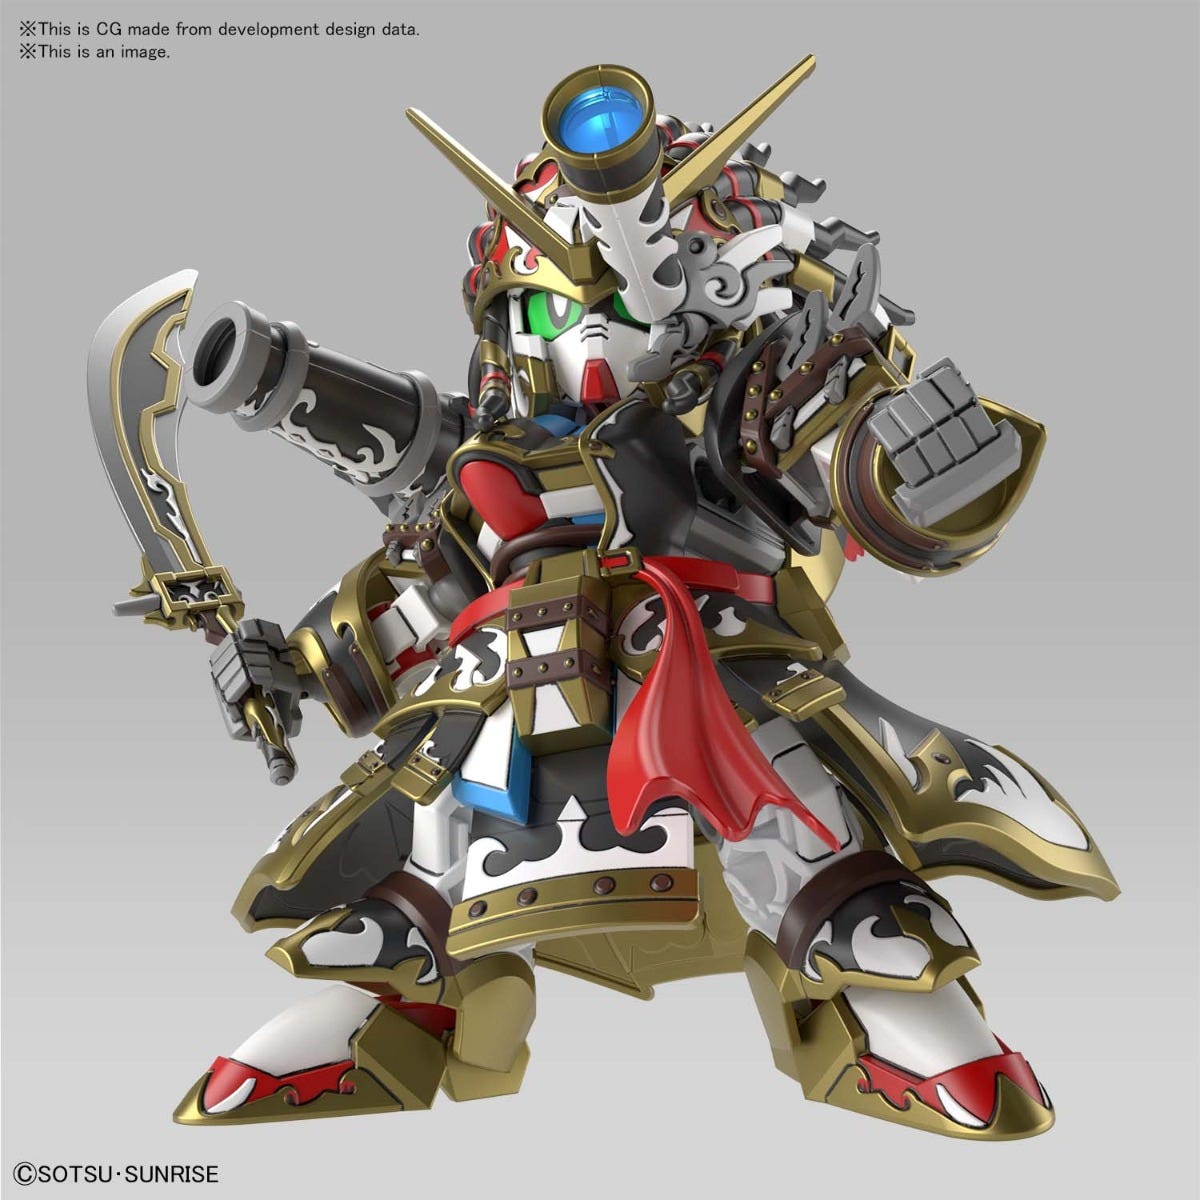 Pre-Order Edward Second V "SD Gundam World Heroes"